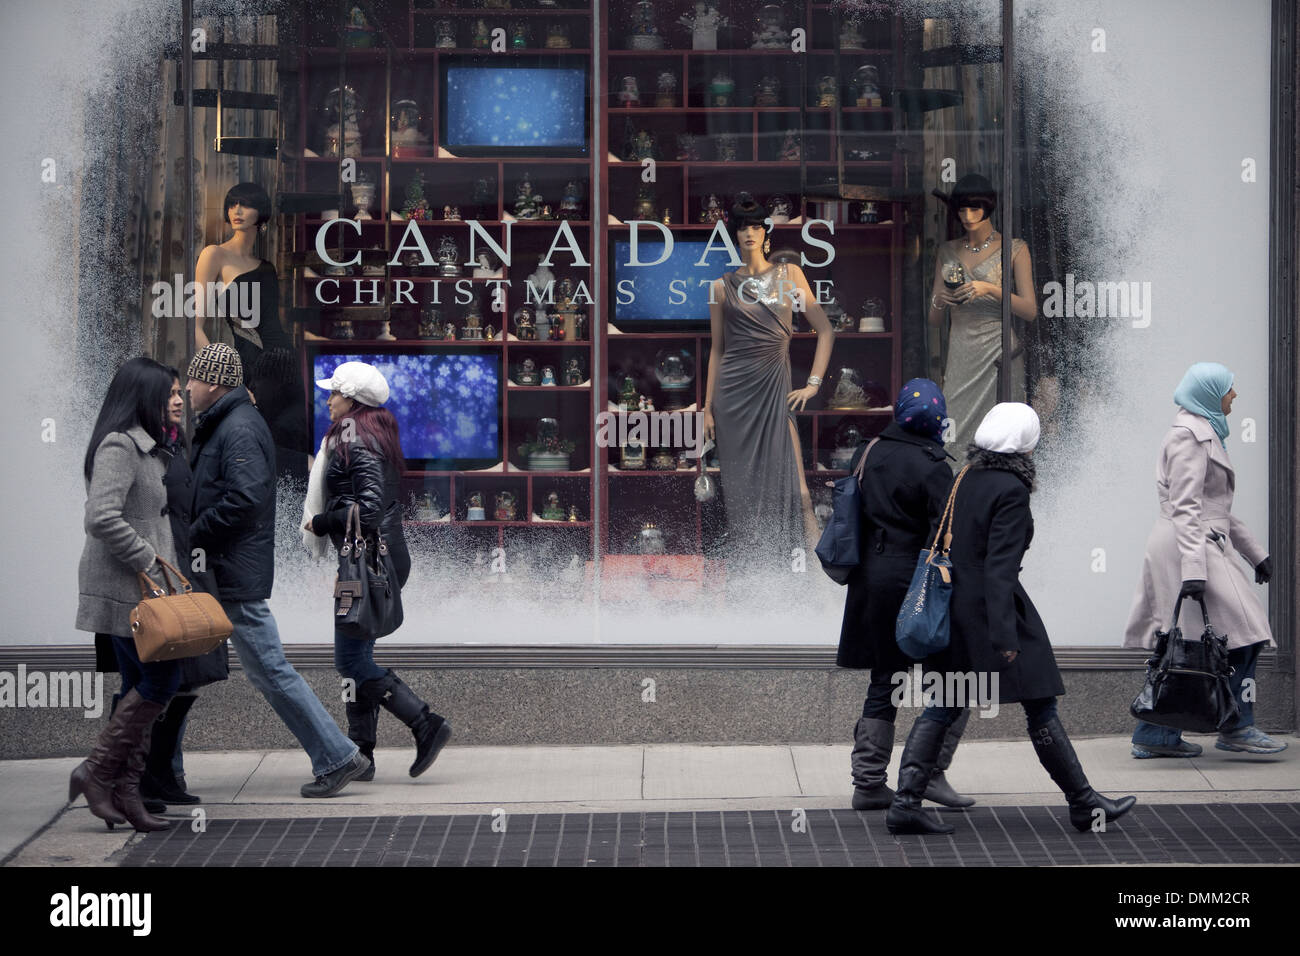 Kanadas Weihnachten Shop The Christmas Erker, Toronto, Kanada, 24. Dezember 2012 Stockfoto